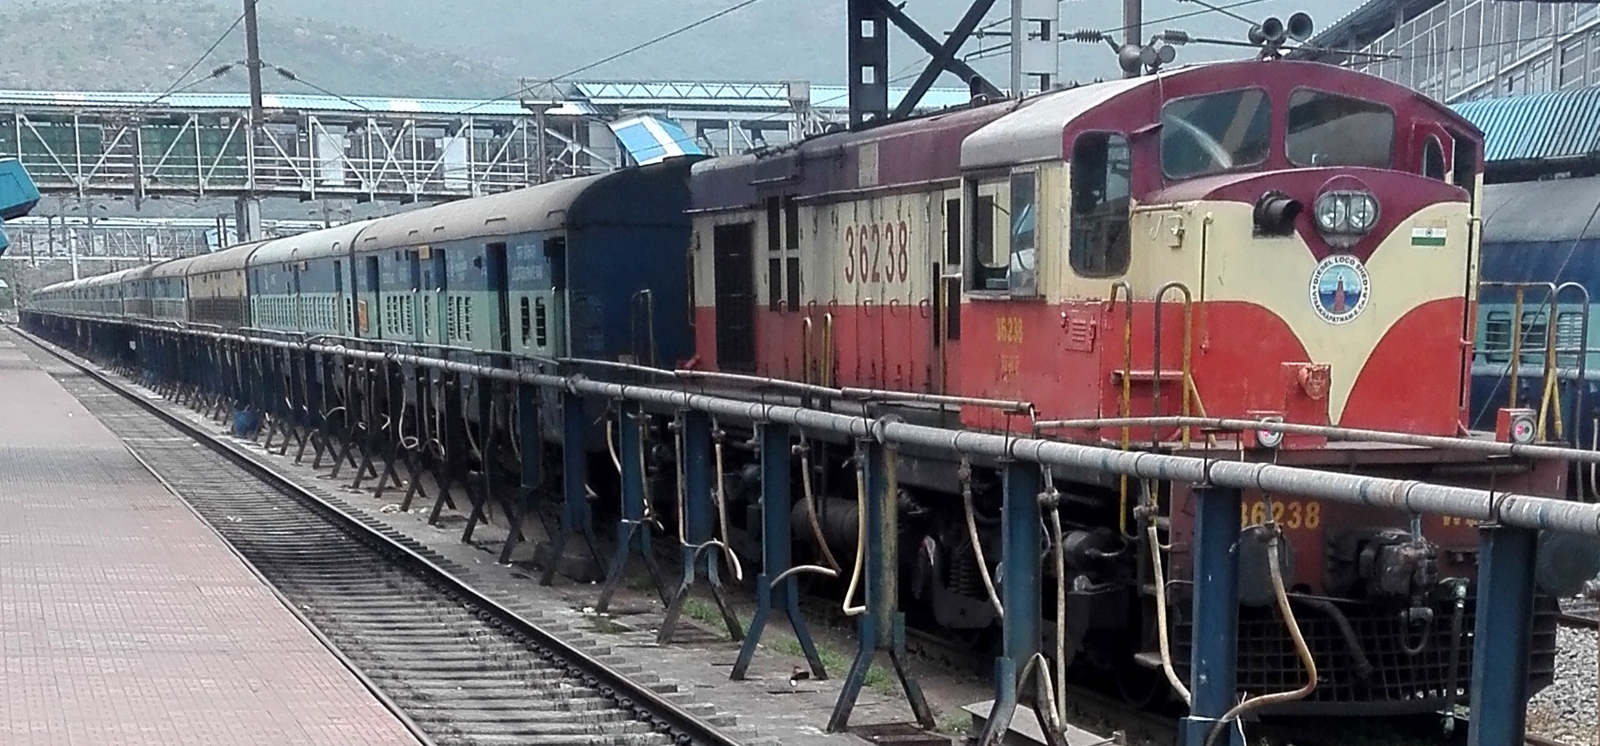 No. 36238 with a heavy passenger train at Visakhapatnam